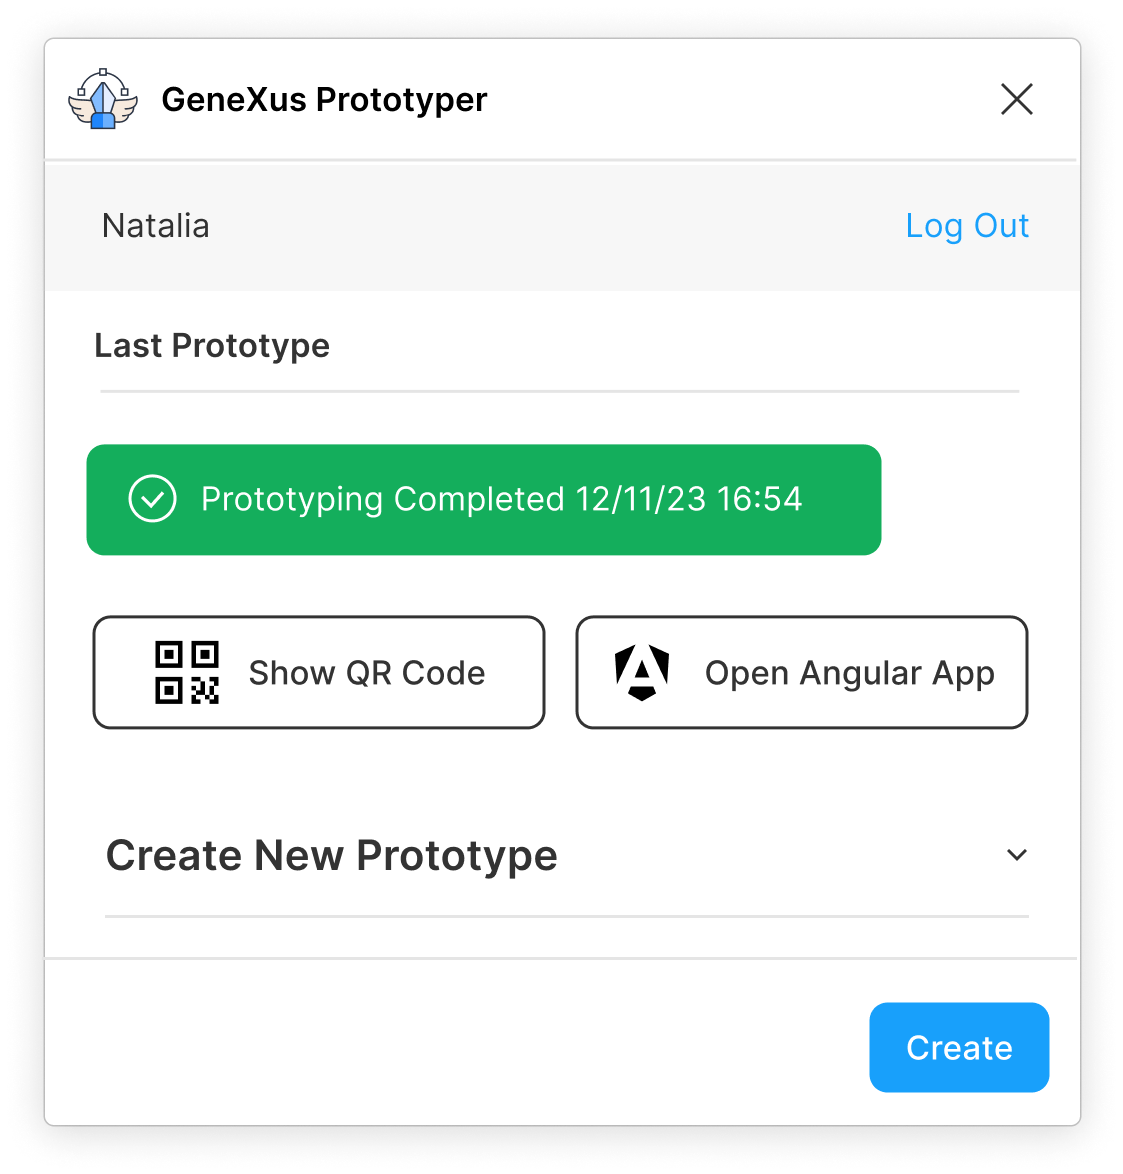 GeneXus Prototyper - Home - Success - Mobile and Angular